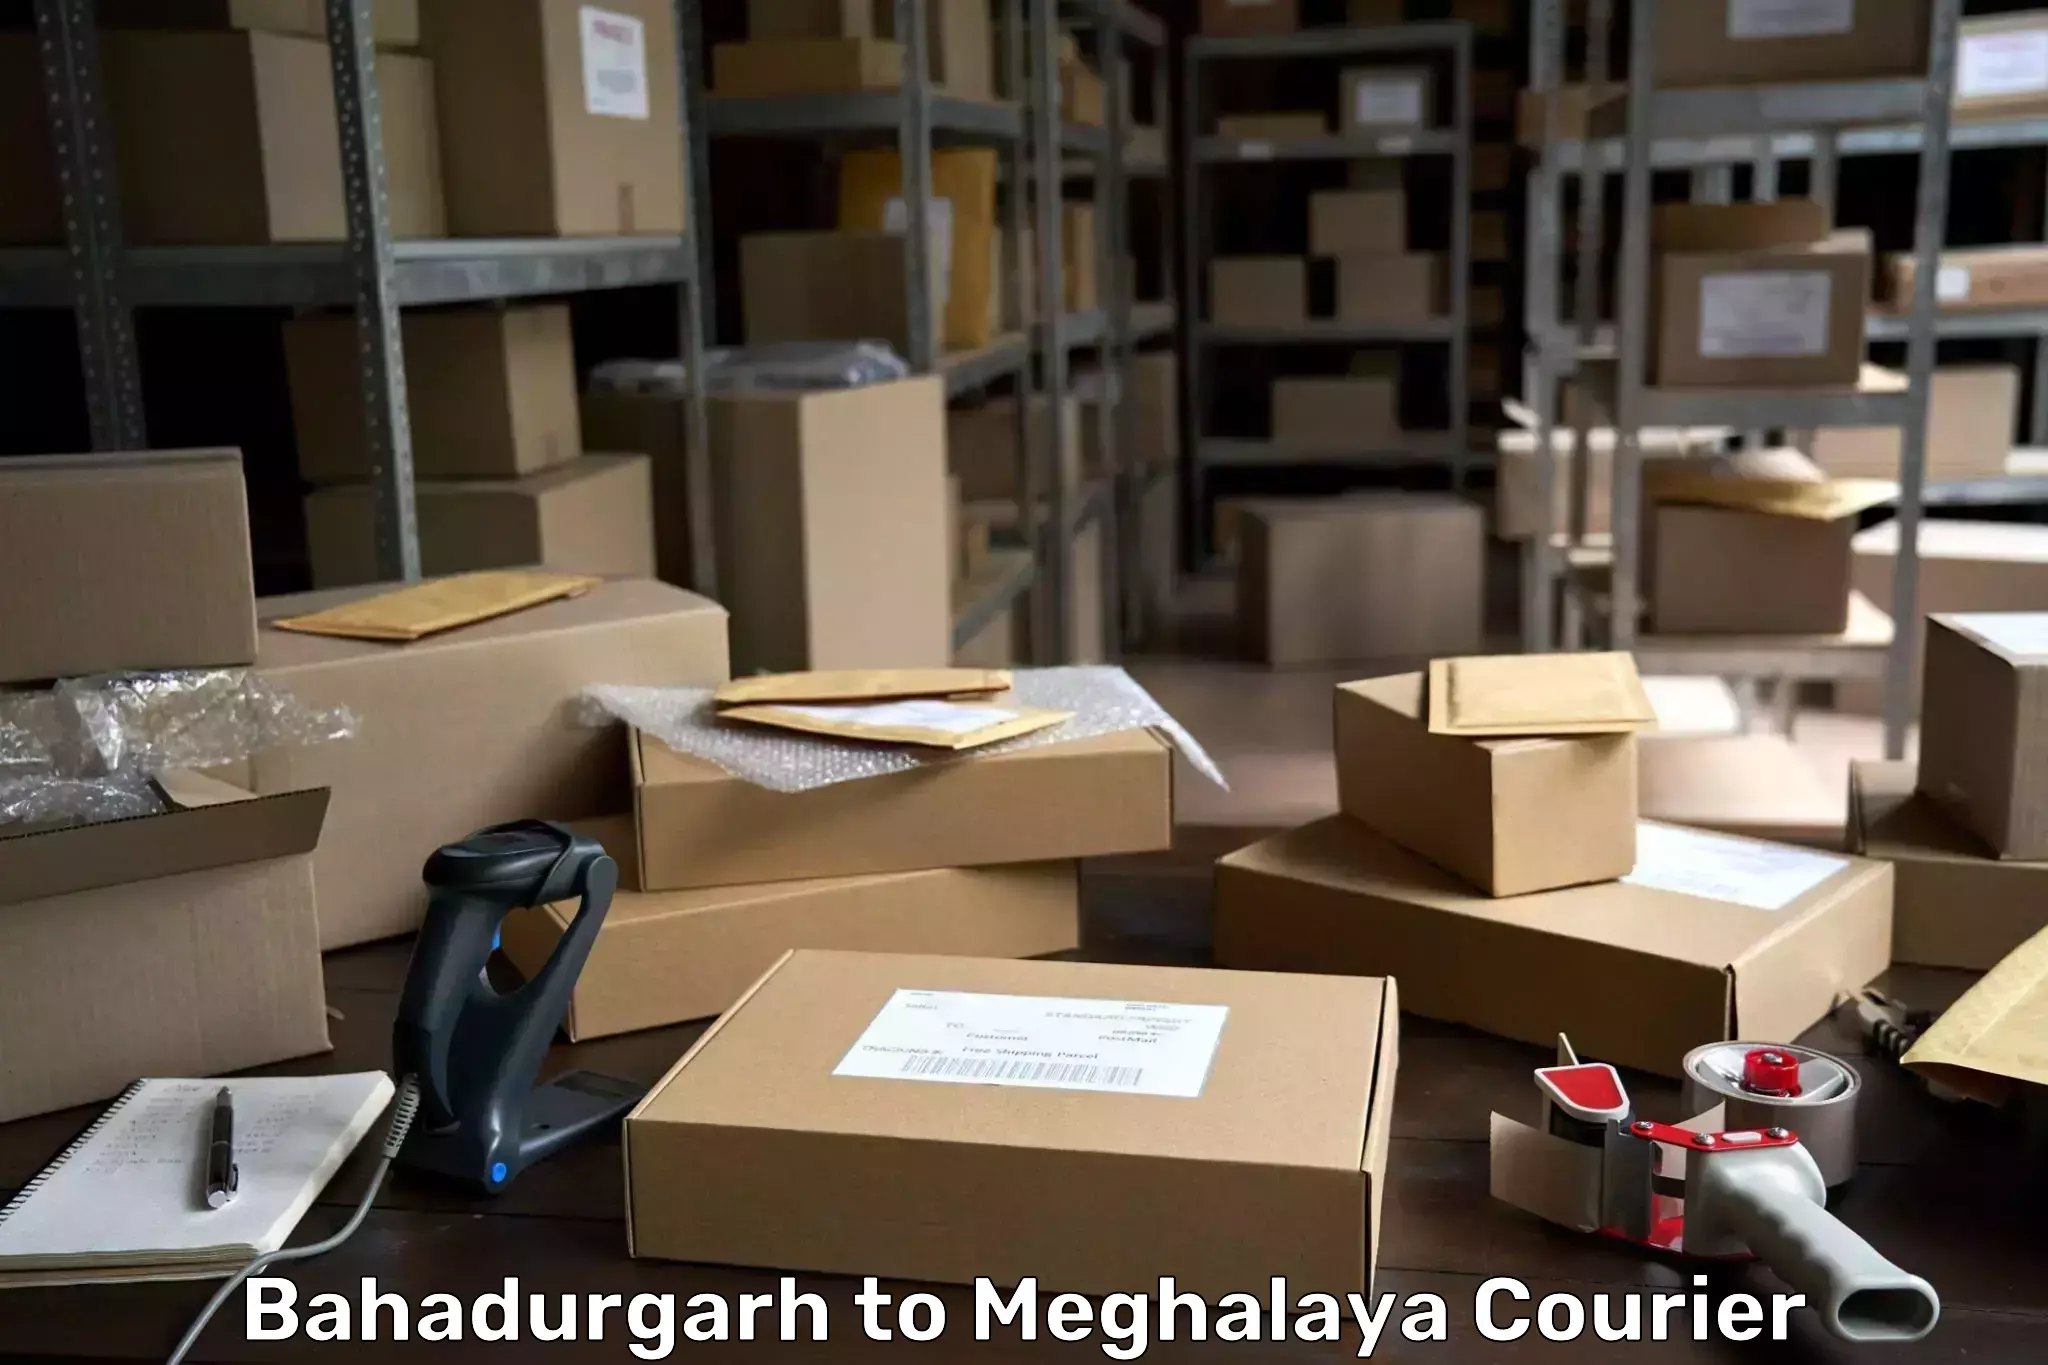 Digital courier platforms Bahadurgarh to Meghalaya